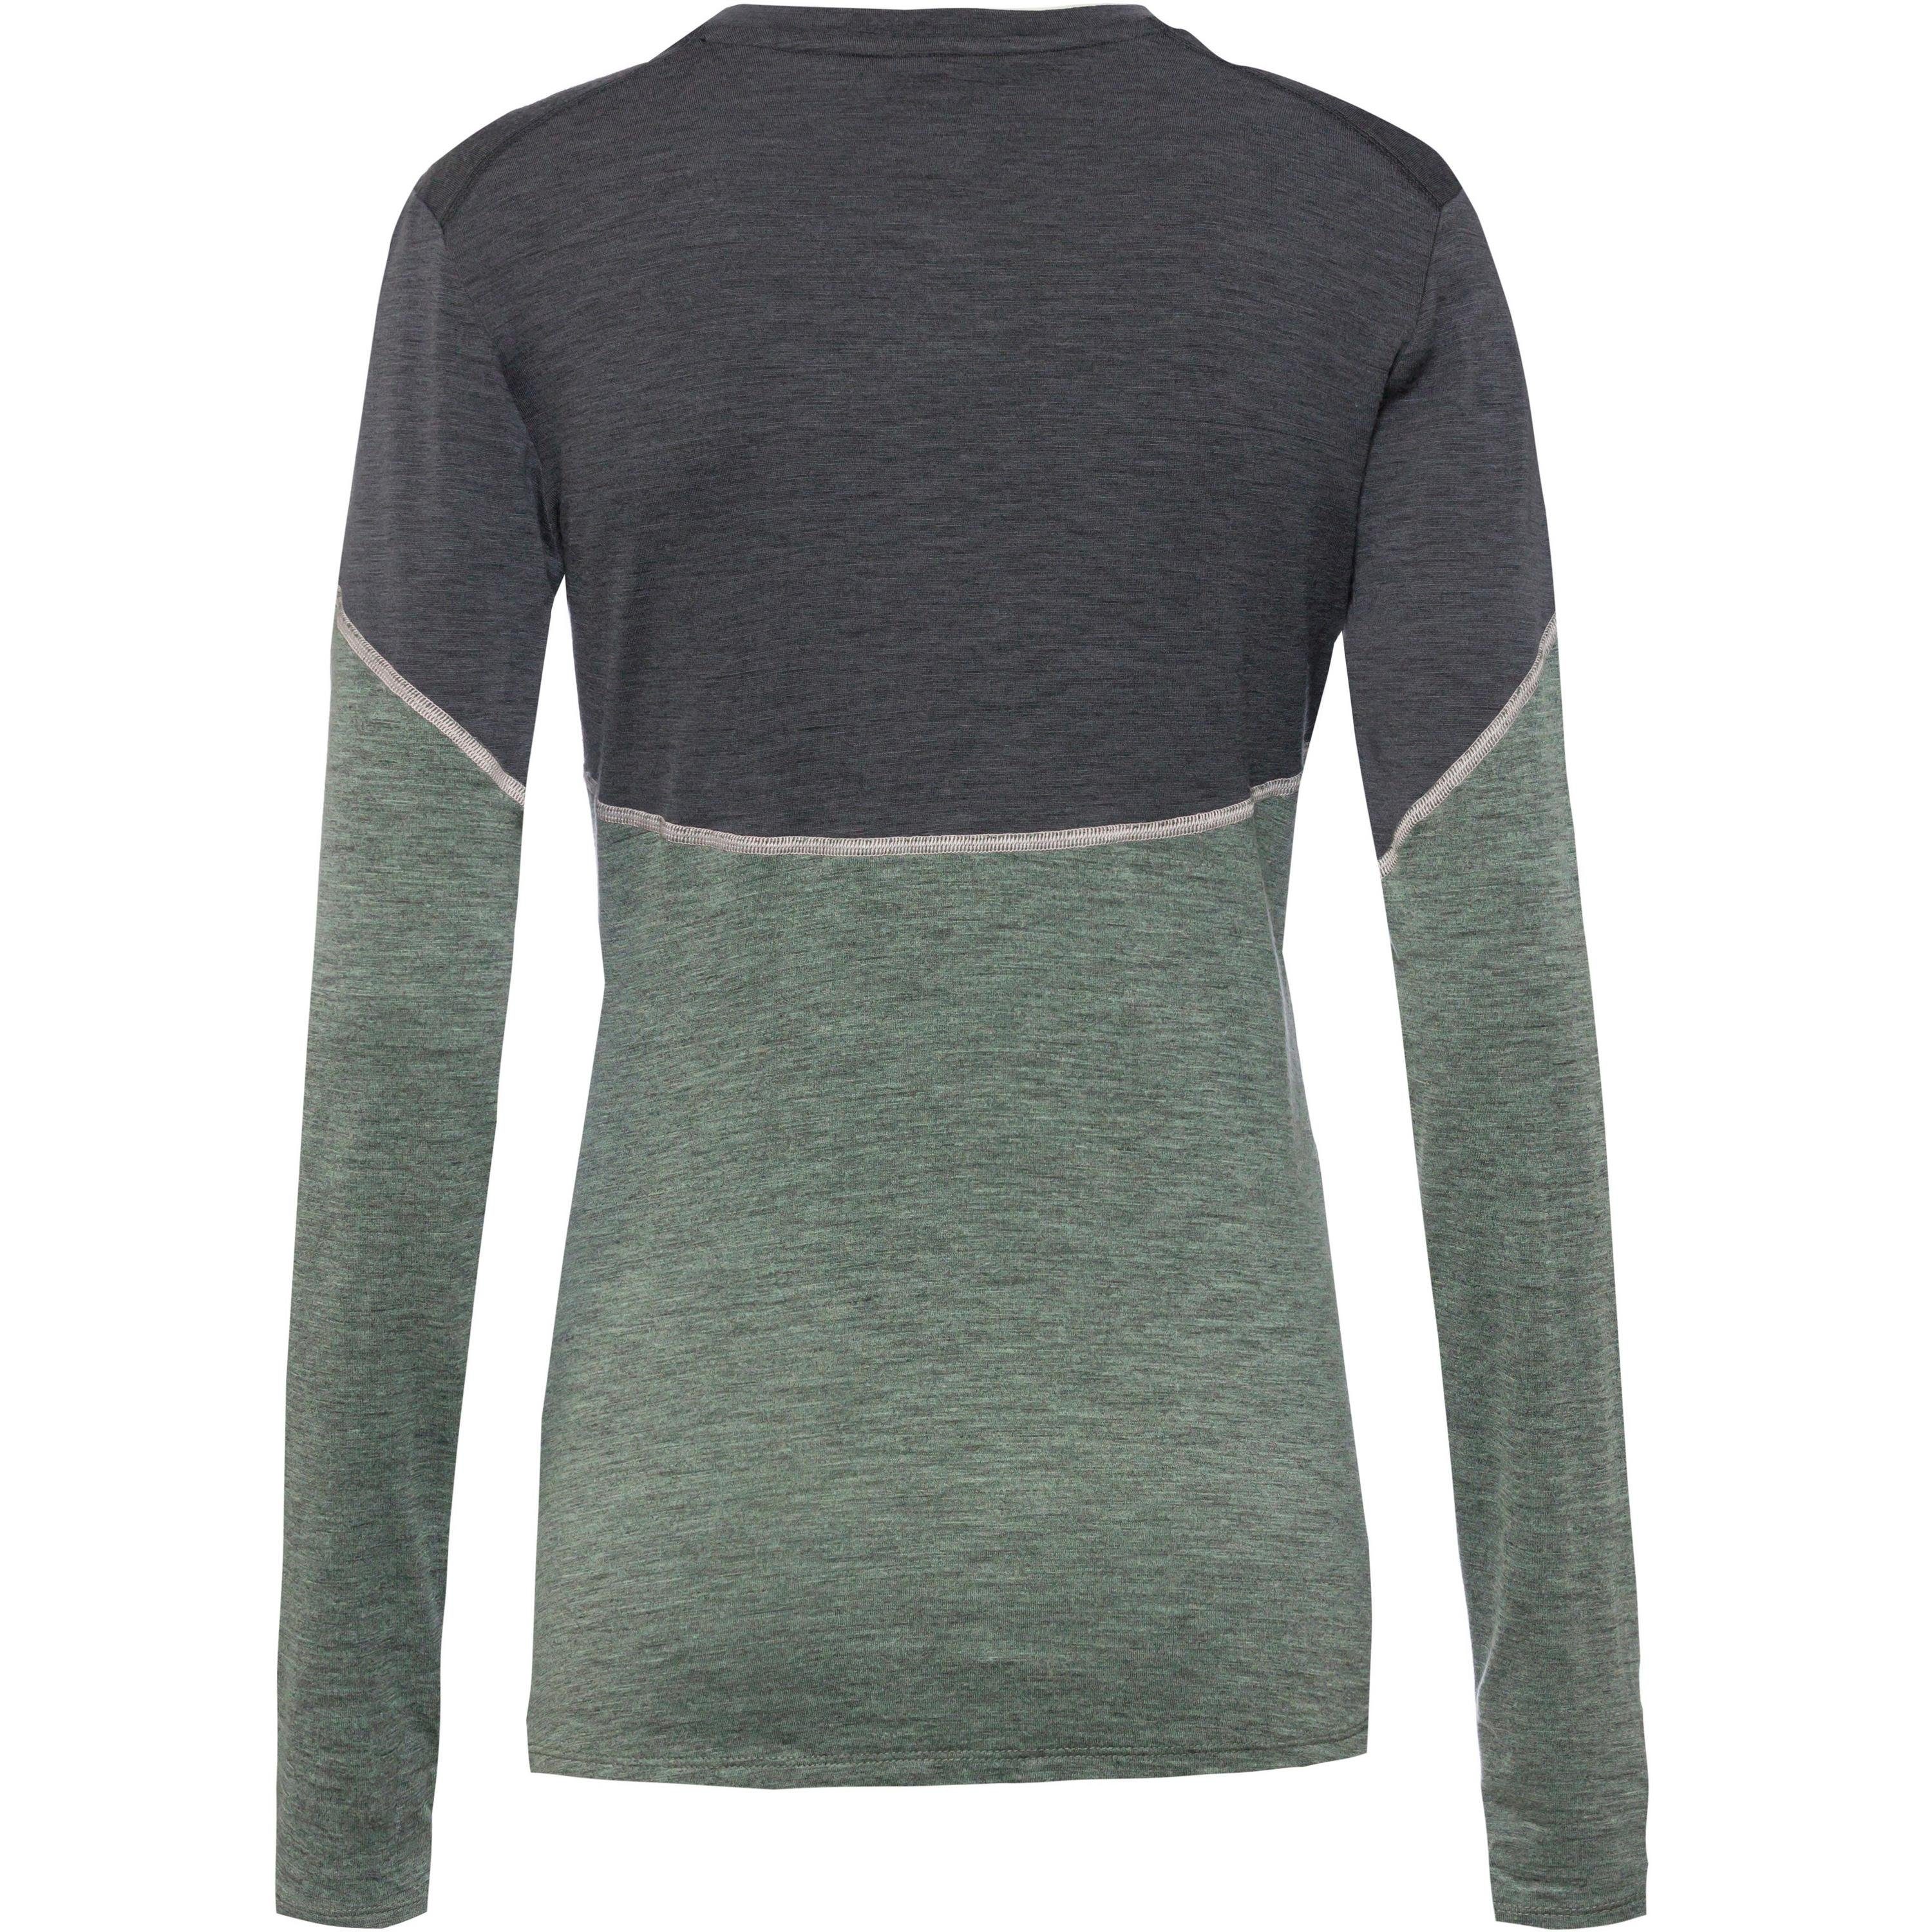 matte 150 melange Odlo green-dark Wool Revelstoke Performance grey Funktionsshirt